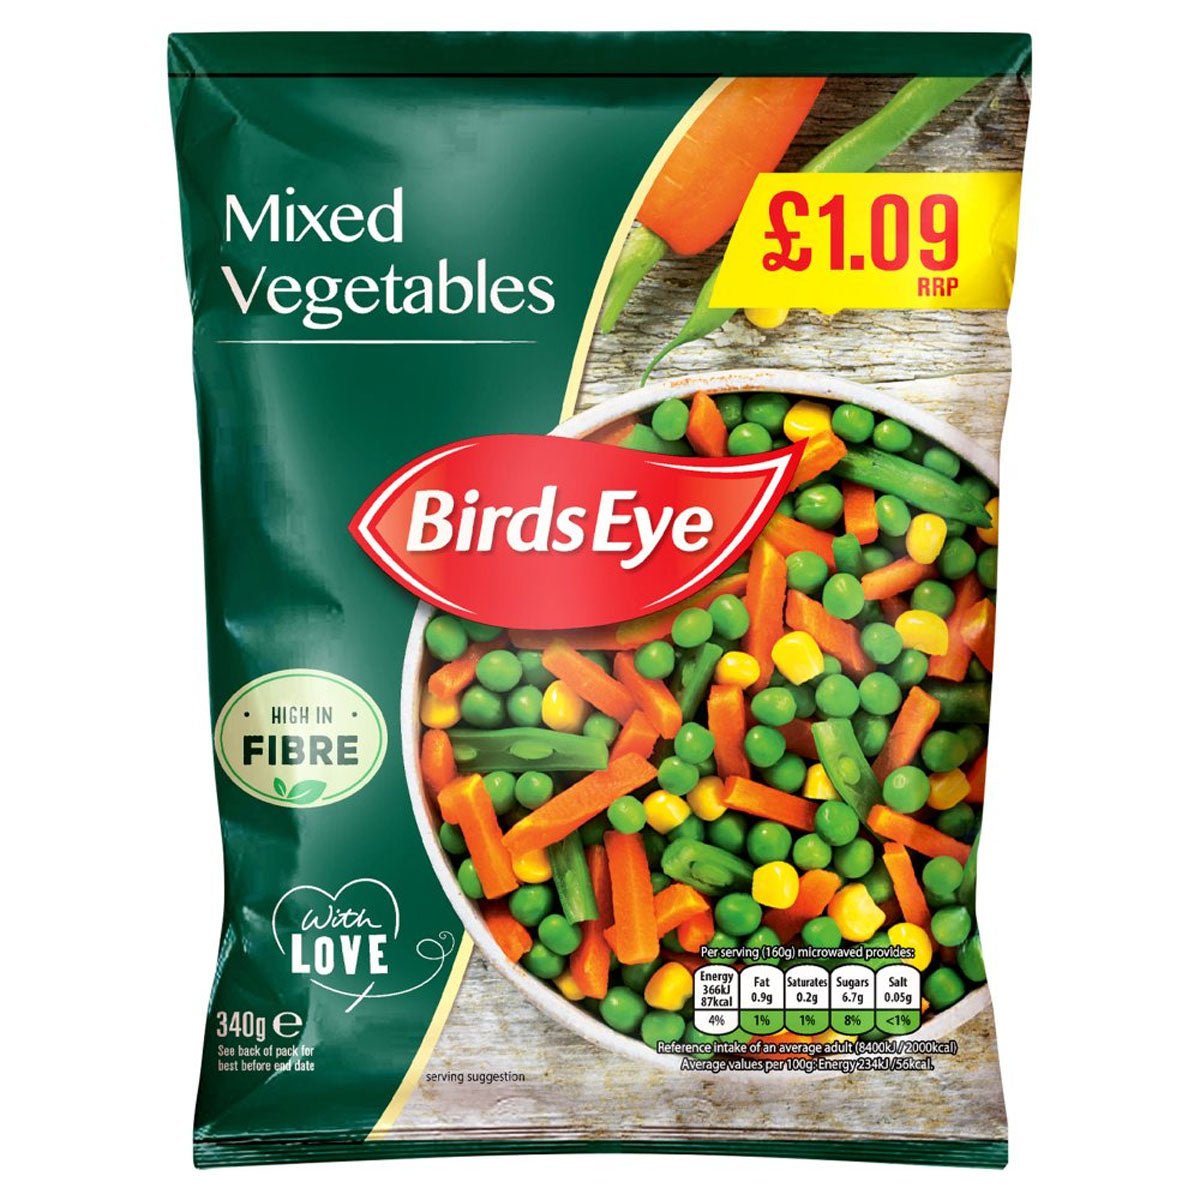 A bag of Birds Eye - Mixed Vegetables - 340g.